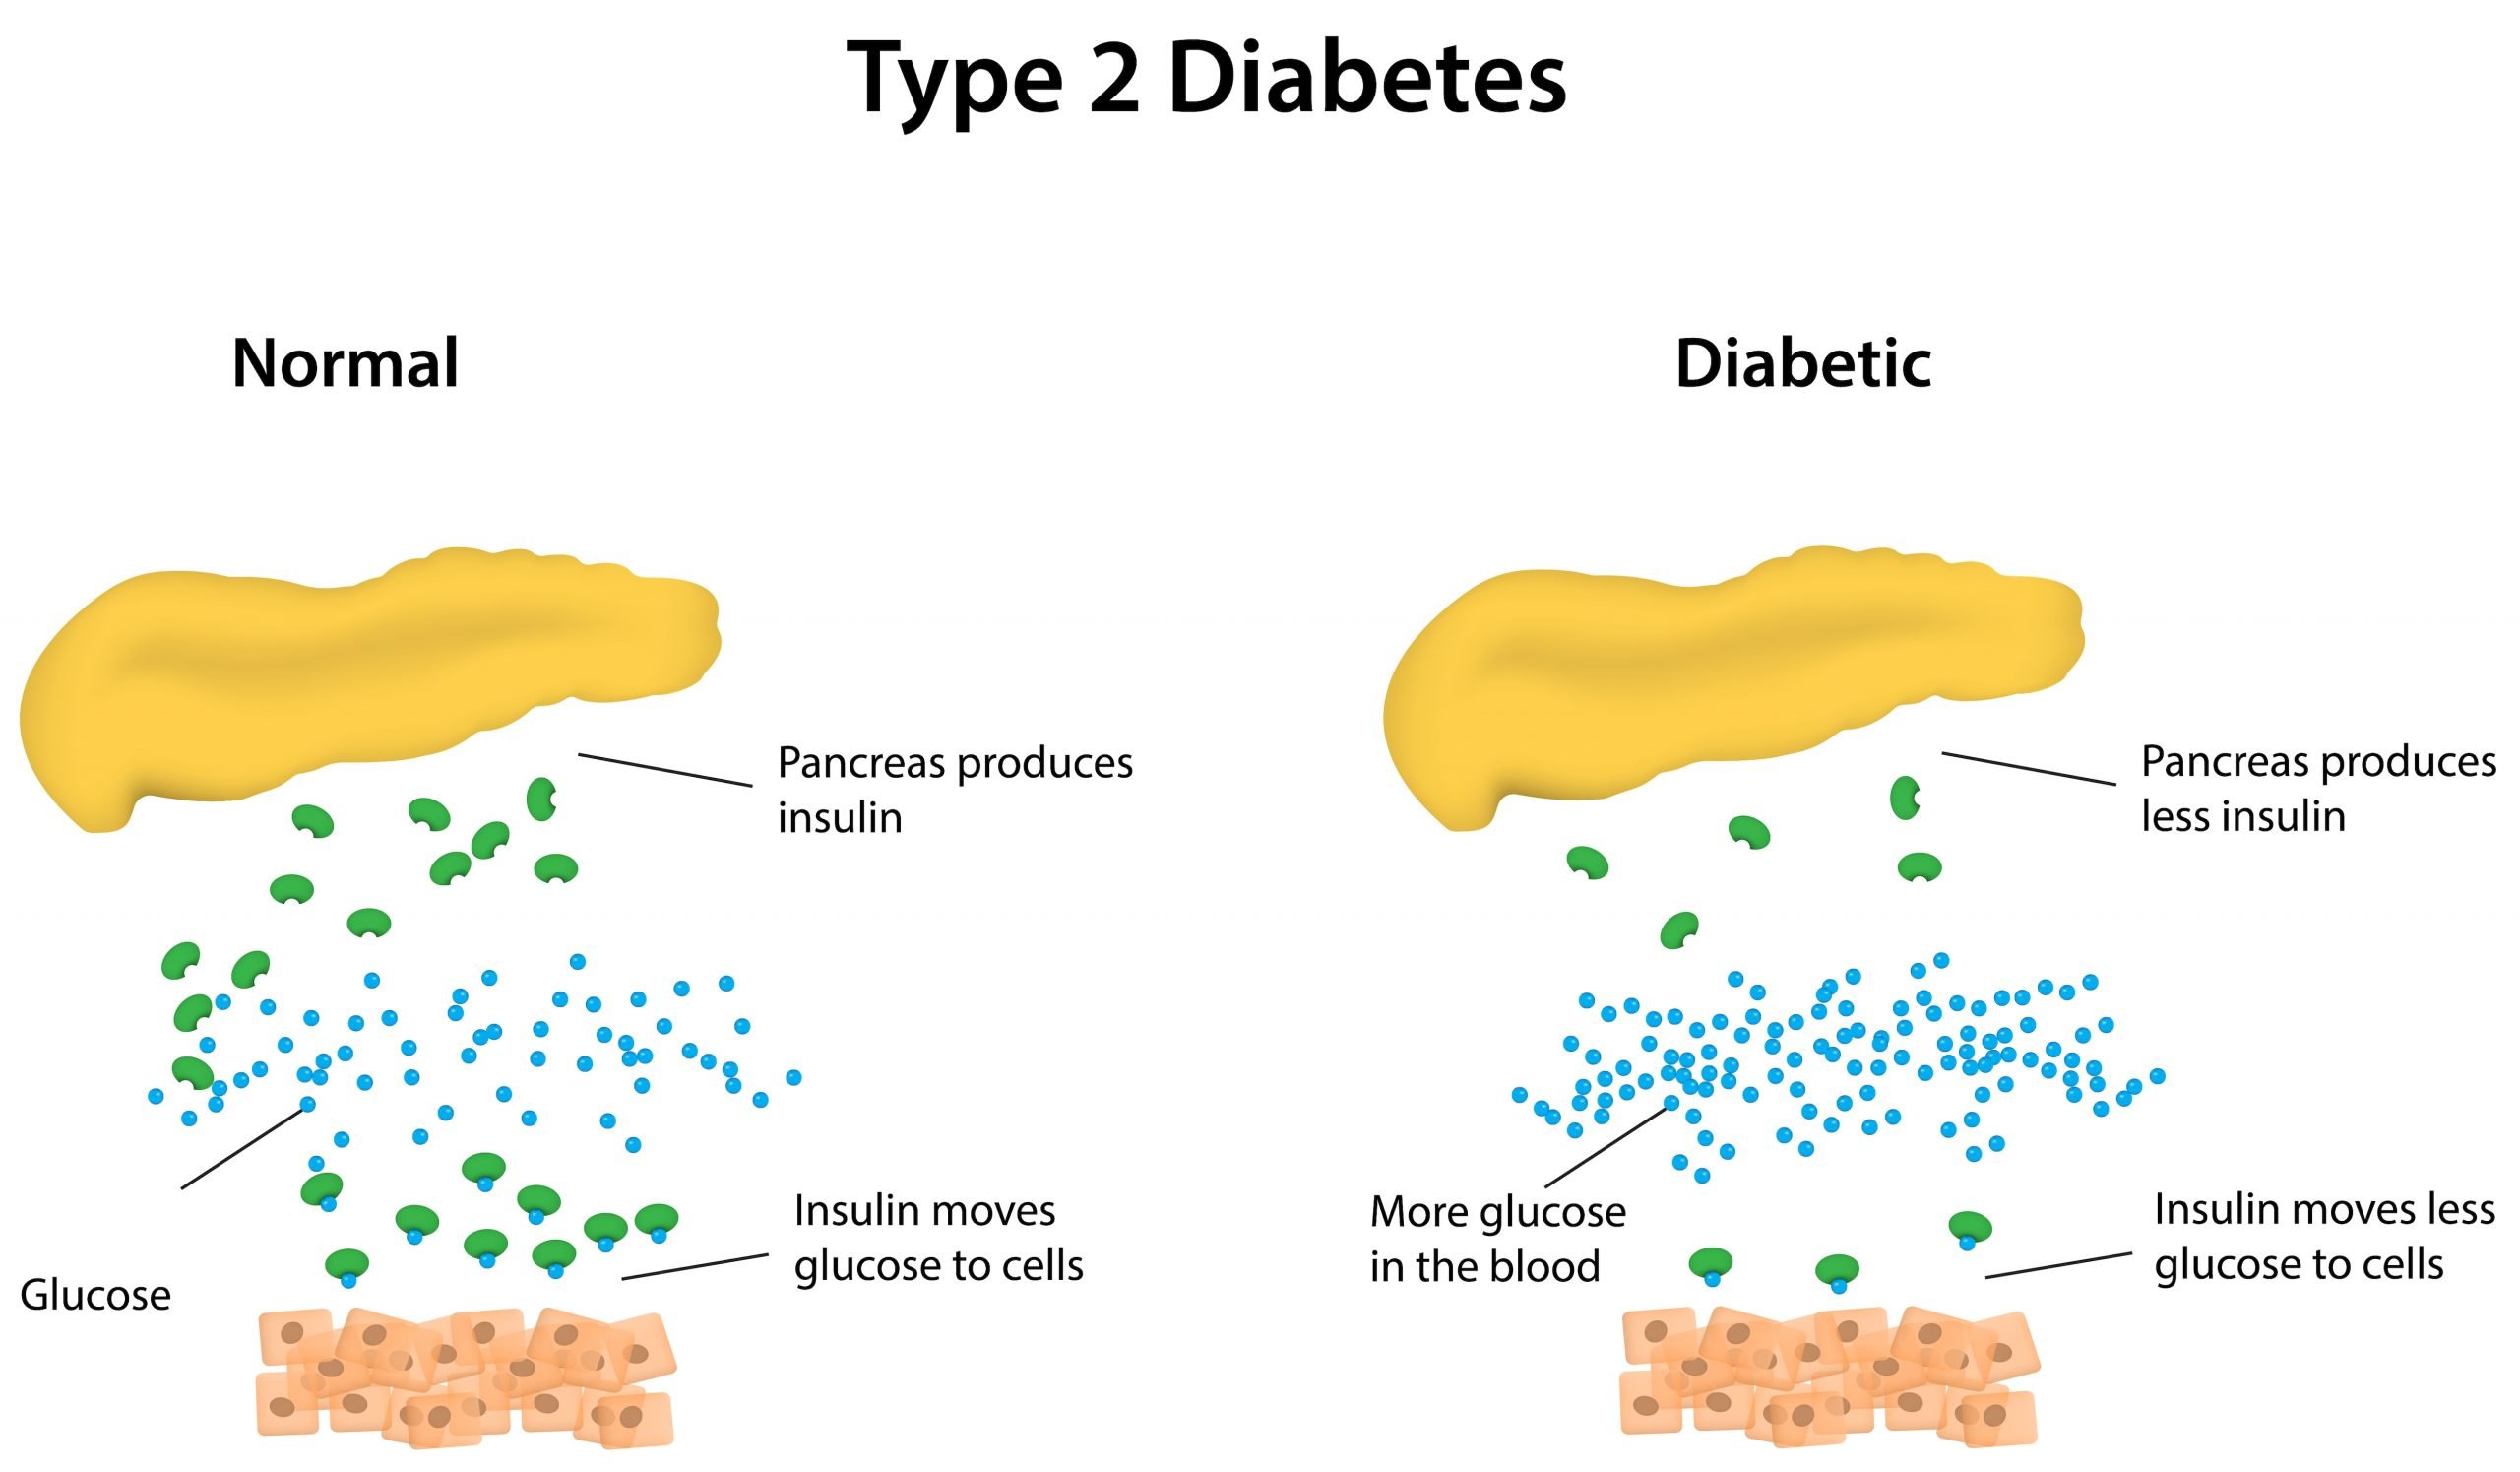 Type 2 Diabetes: Metabolomics Reveals Lipid Metabolism Dysregulation